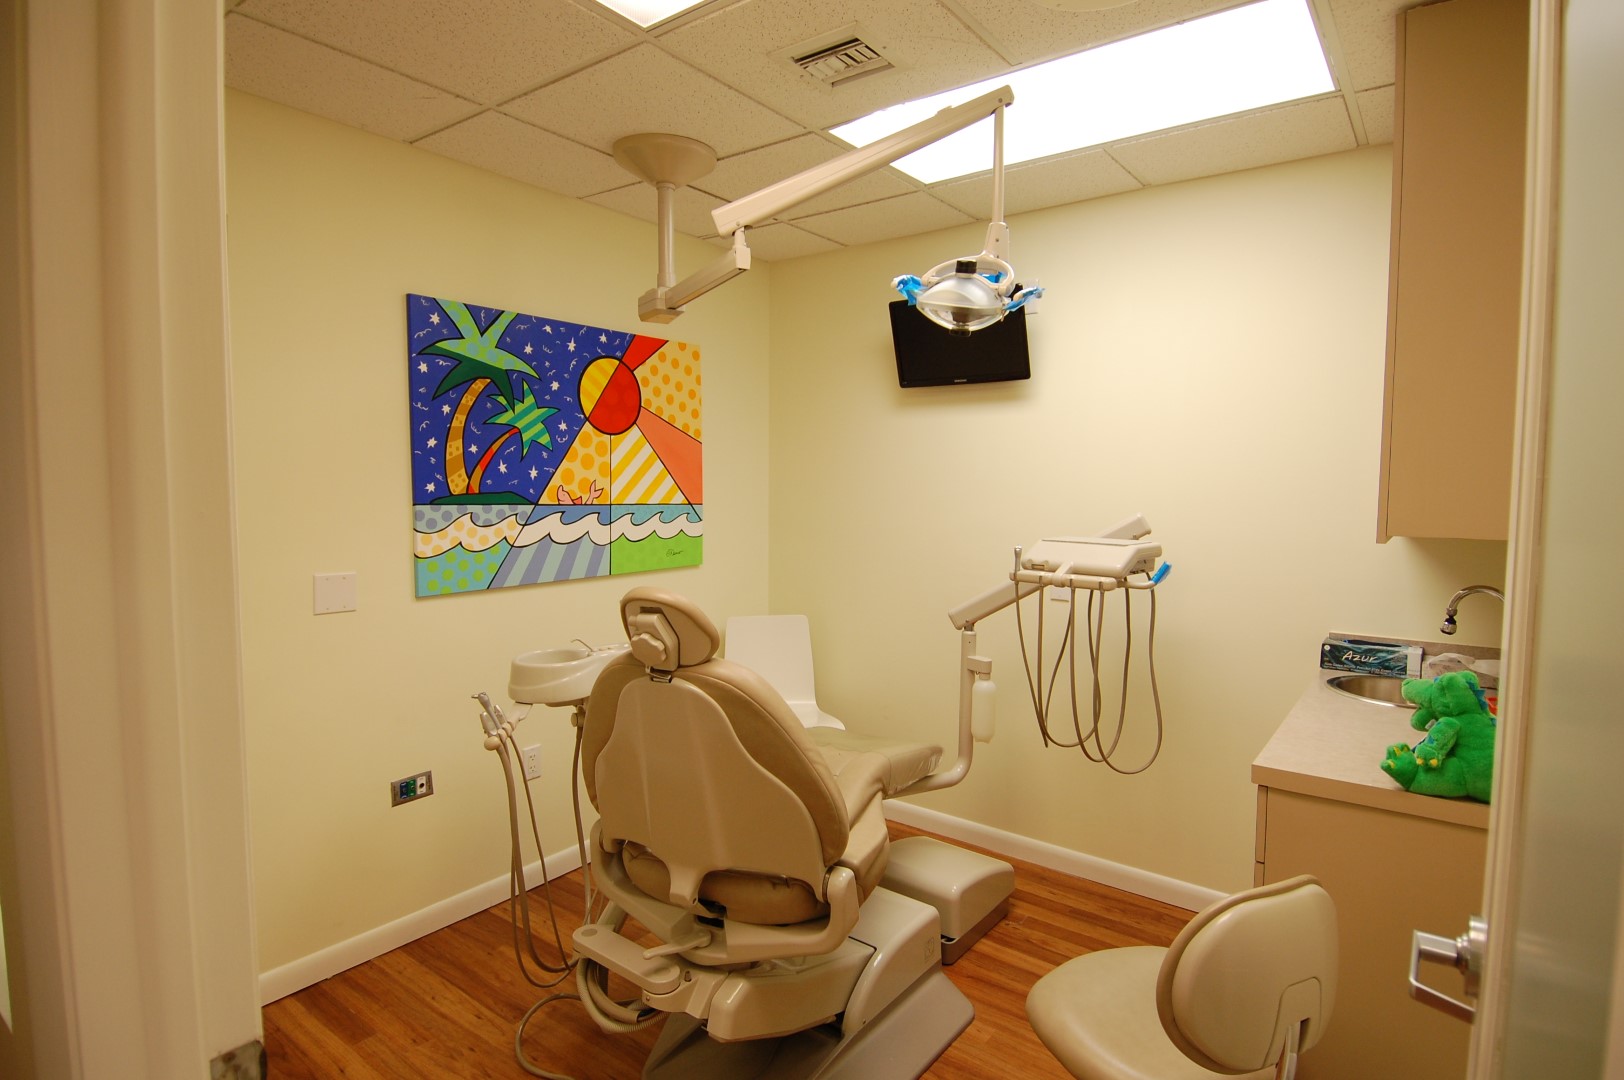 KONQUEST Inc.: Pediatric Dentistry of Weston